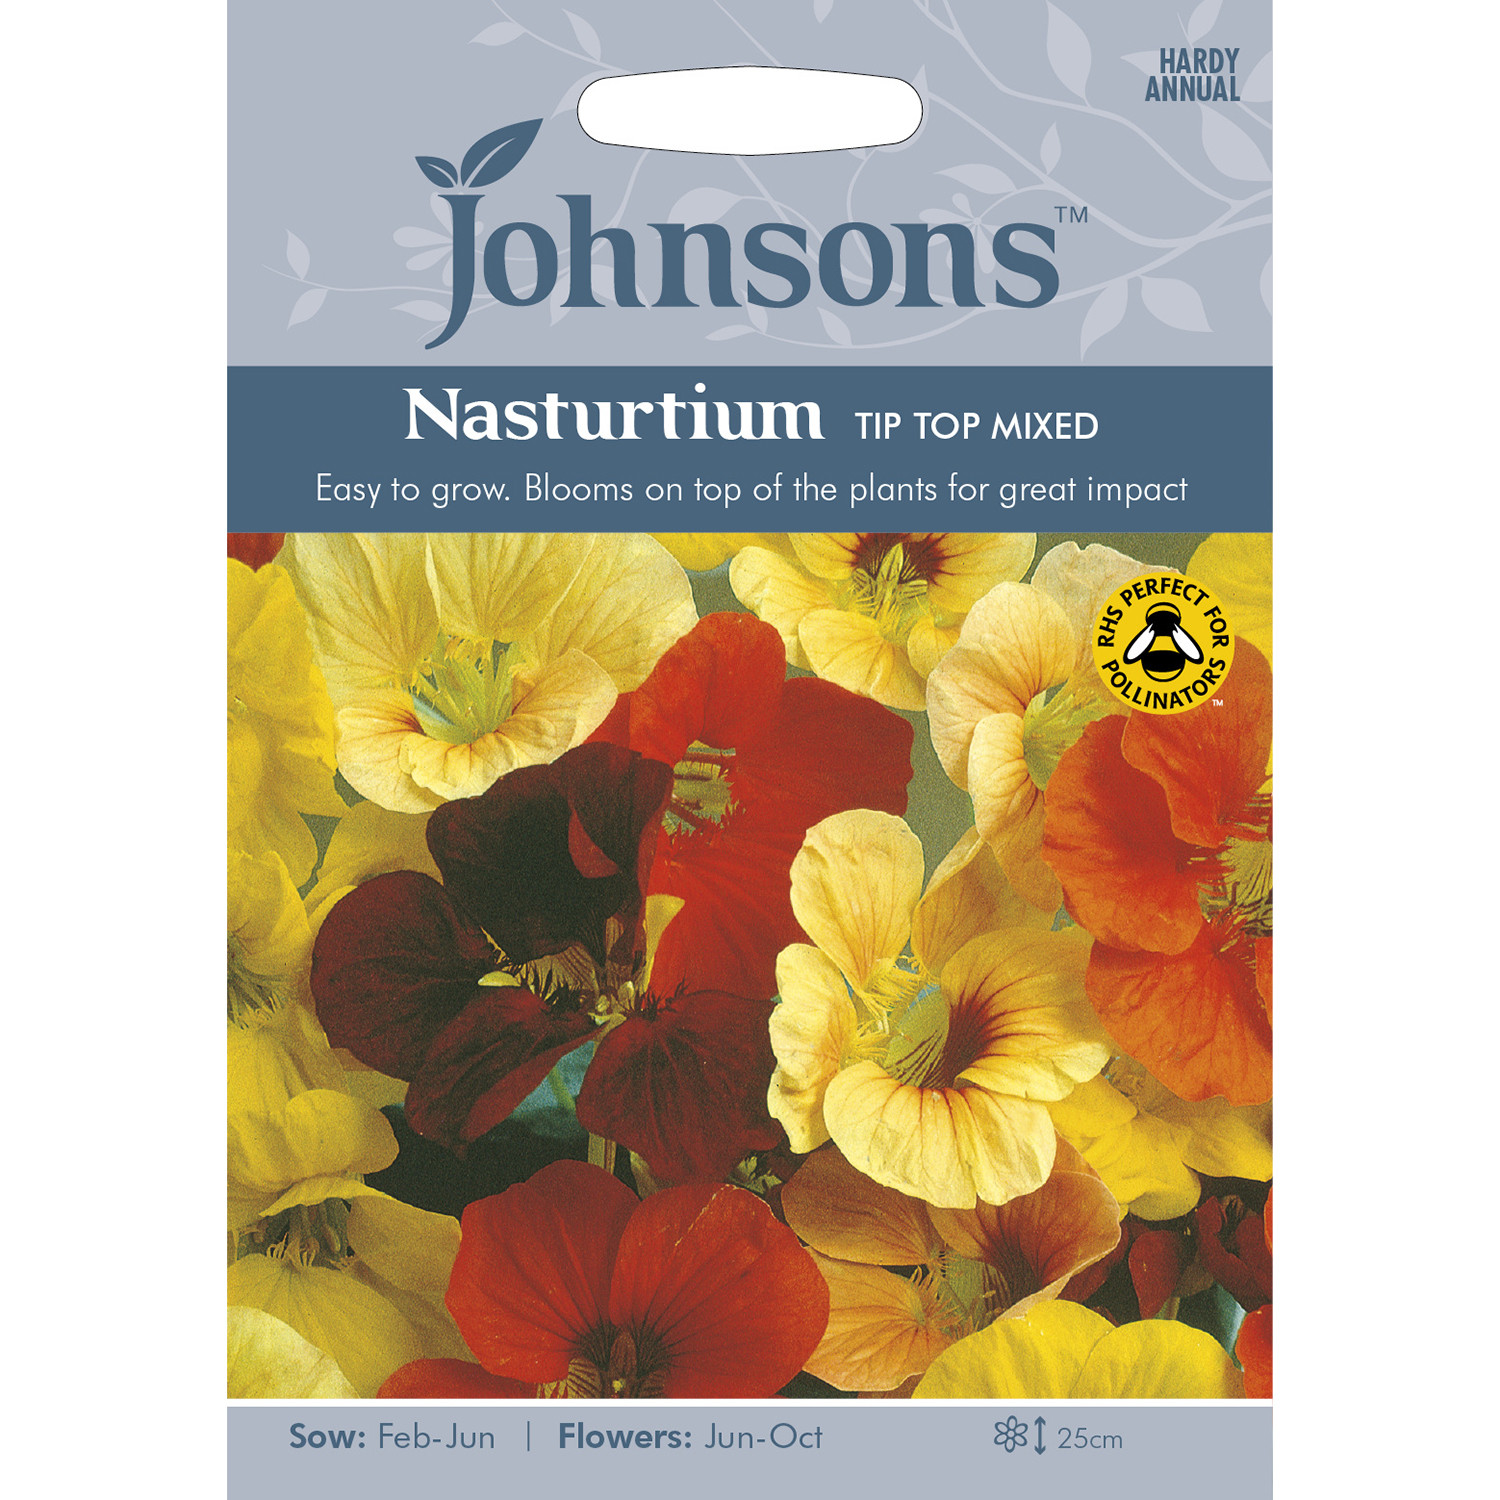 Johnsons Nasturtium Tip Top Mixed Flower Seeds Image 2